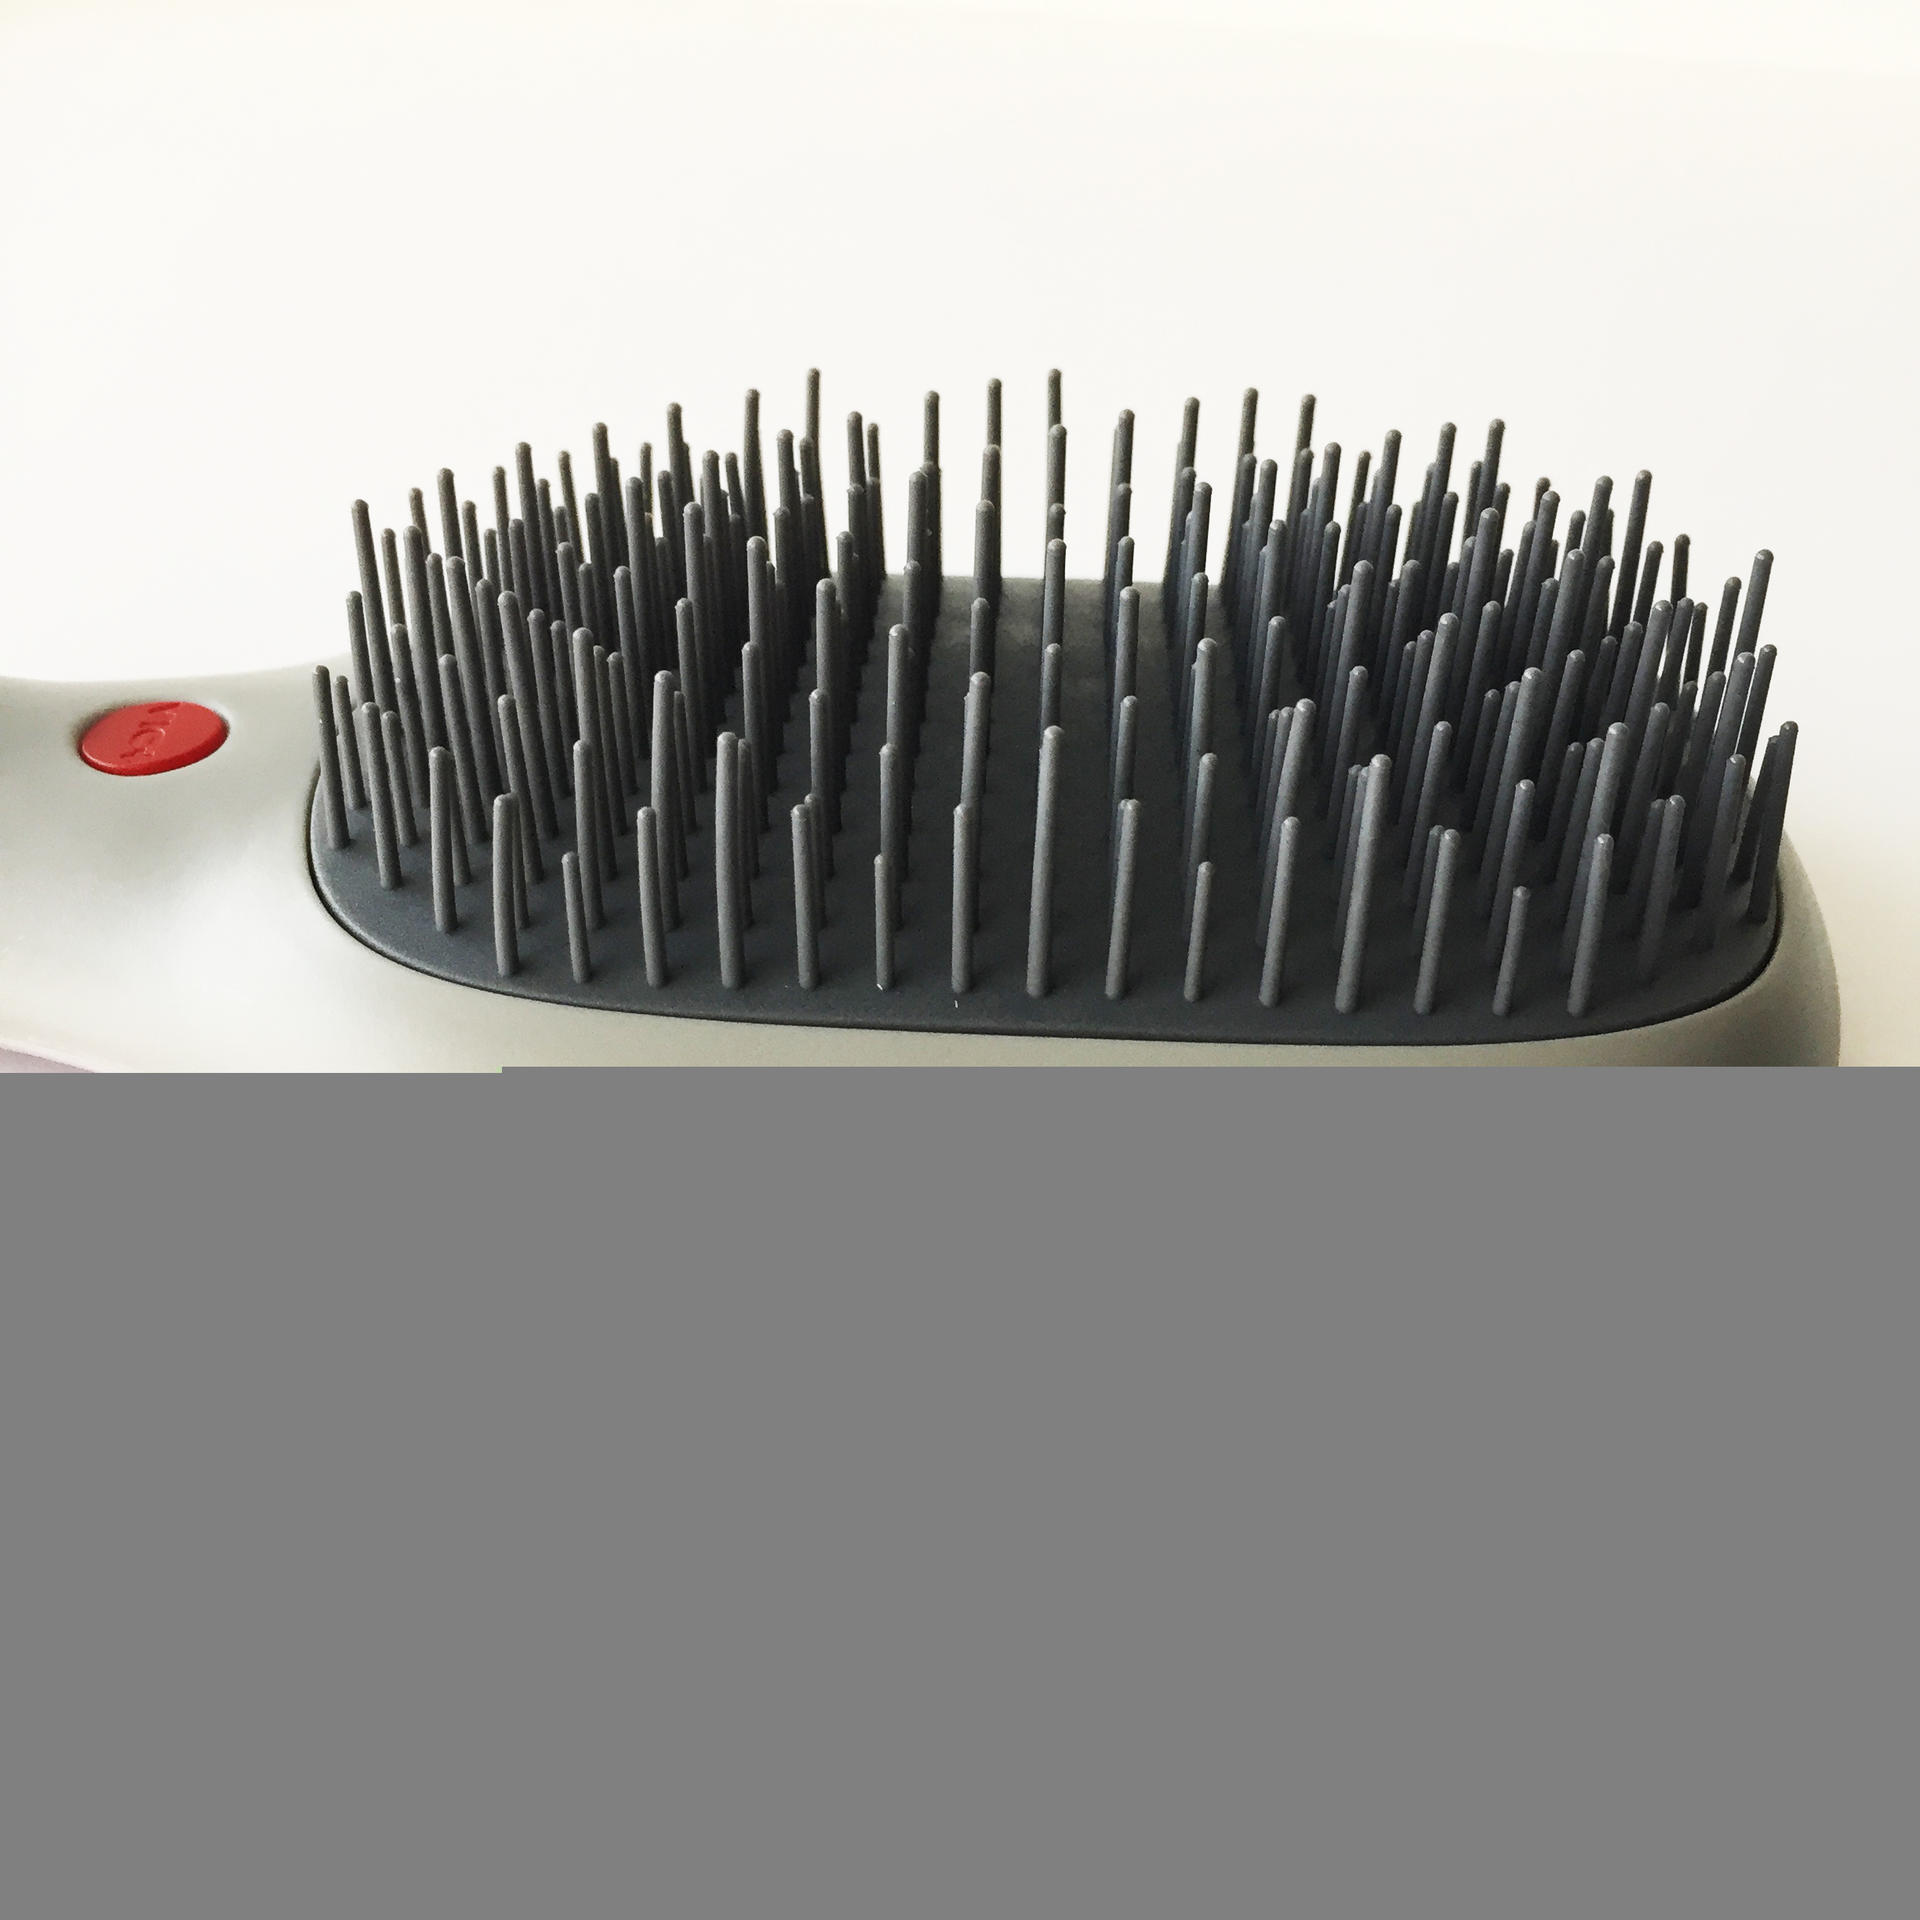 Wholesale salon hair extension comb hair tangled bristle tangle hair brush